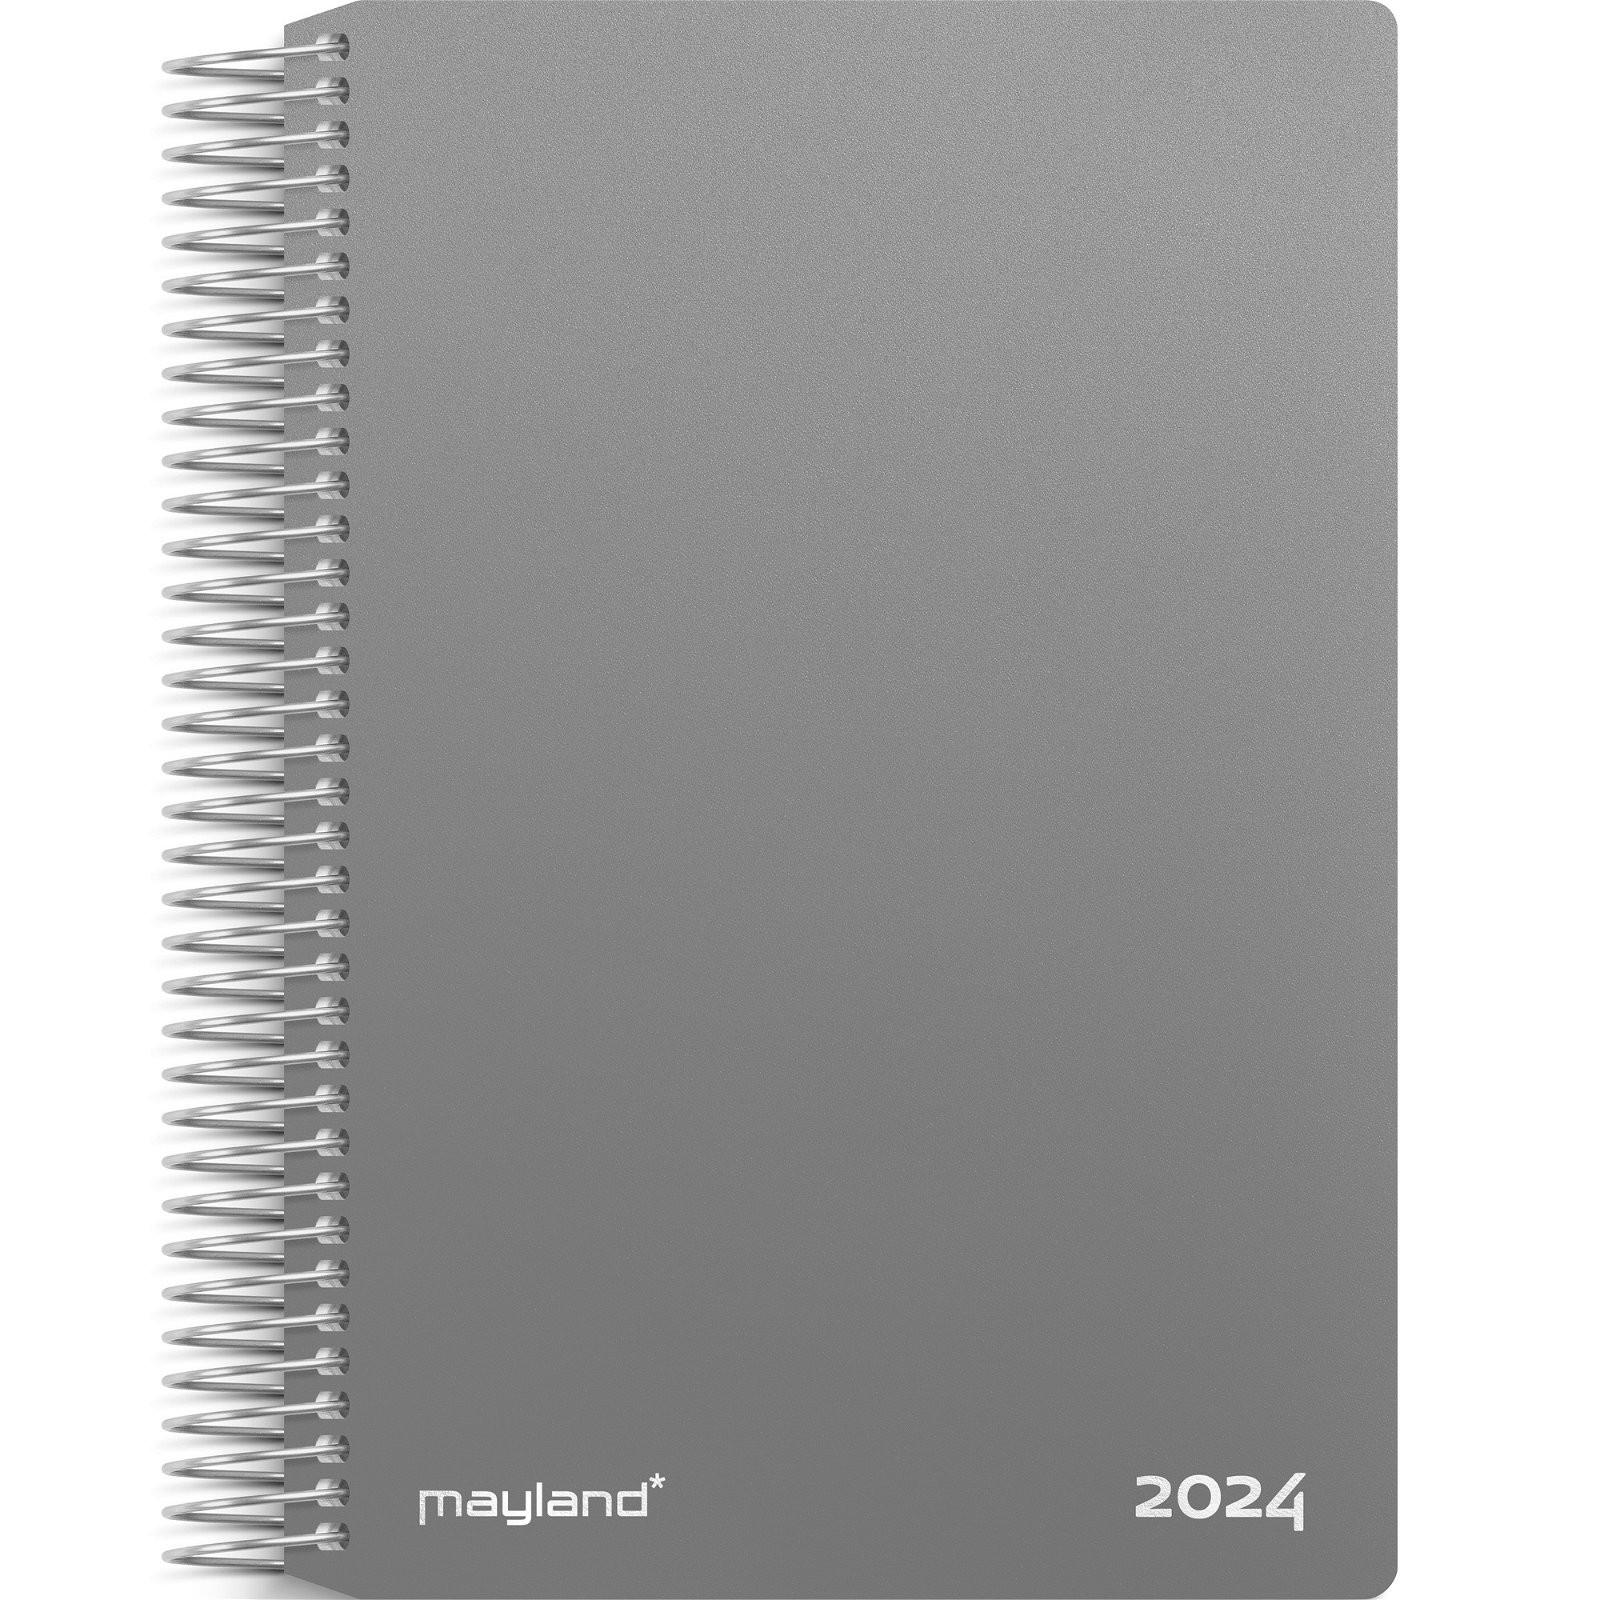 Mayland 2024 24212000 spiralkalender 17,7x13,5cm mørkegrå